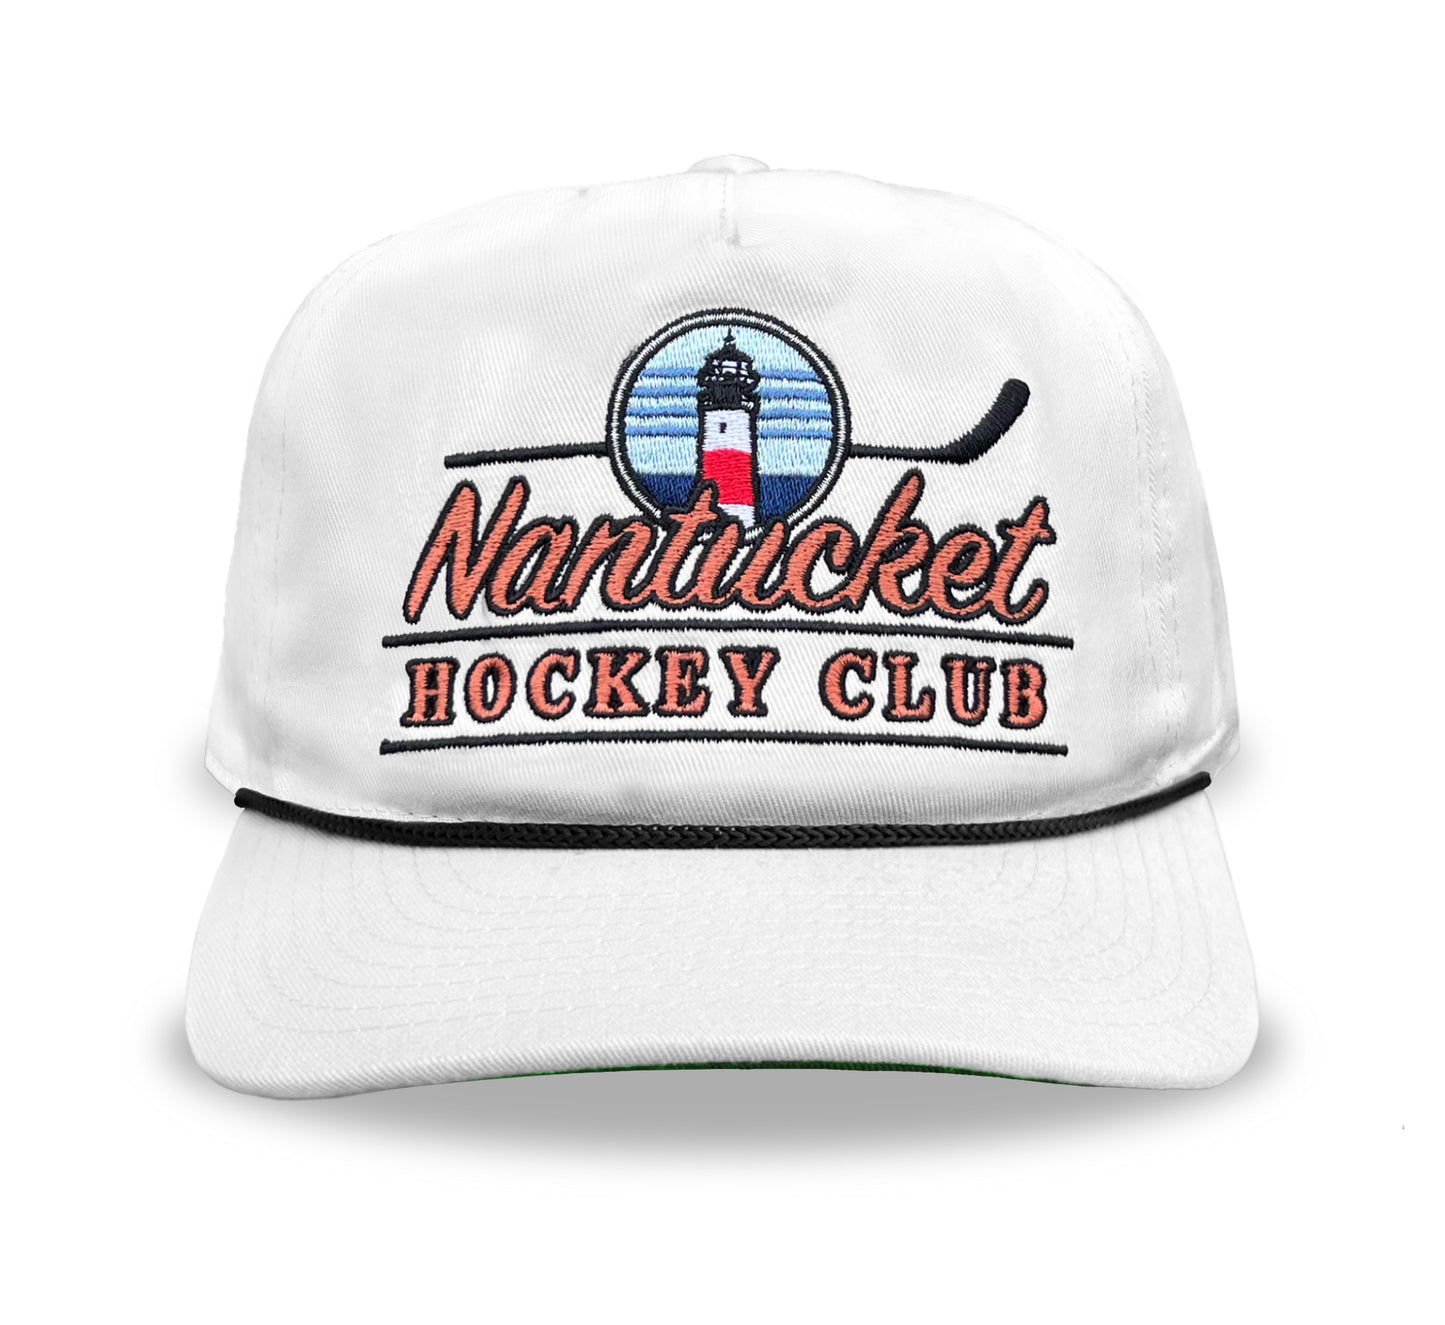 Nantucket Hockey Club: White